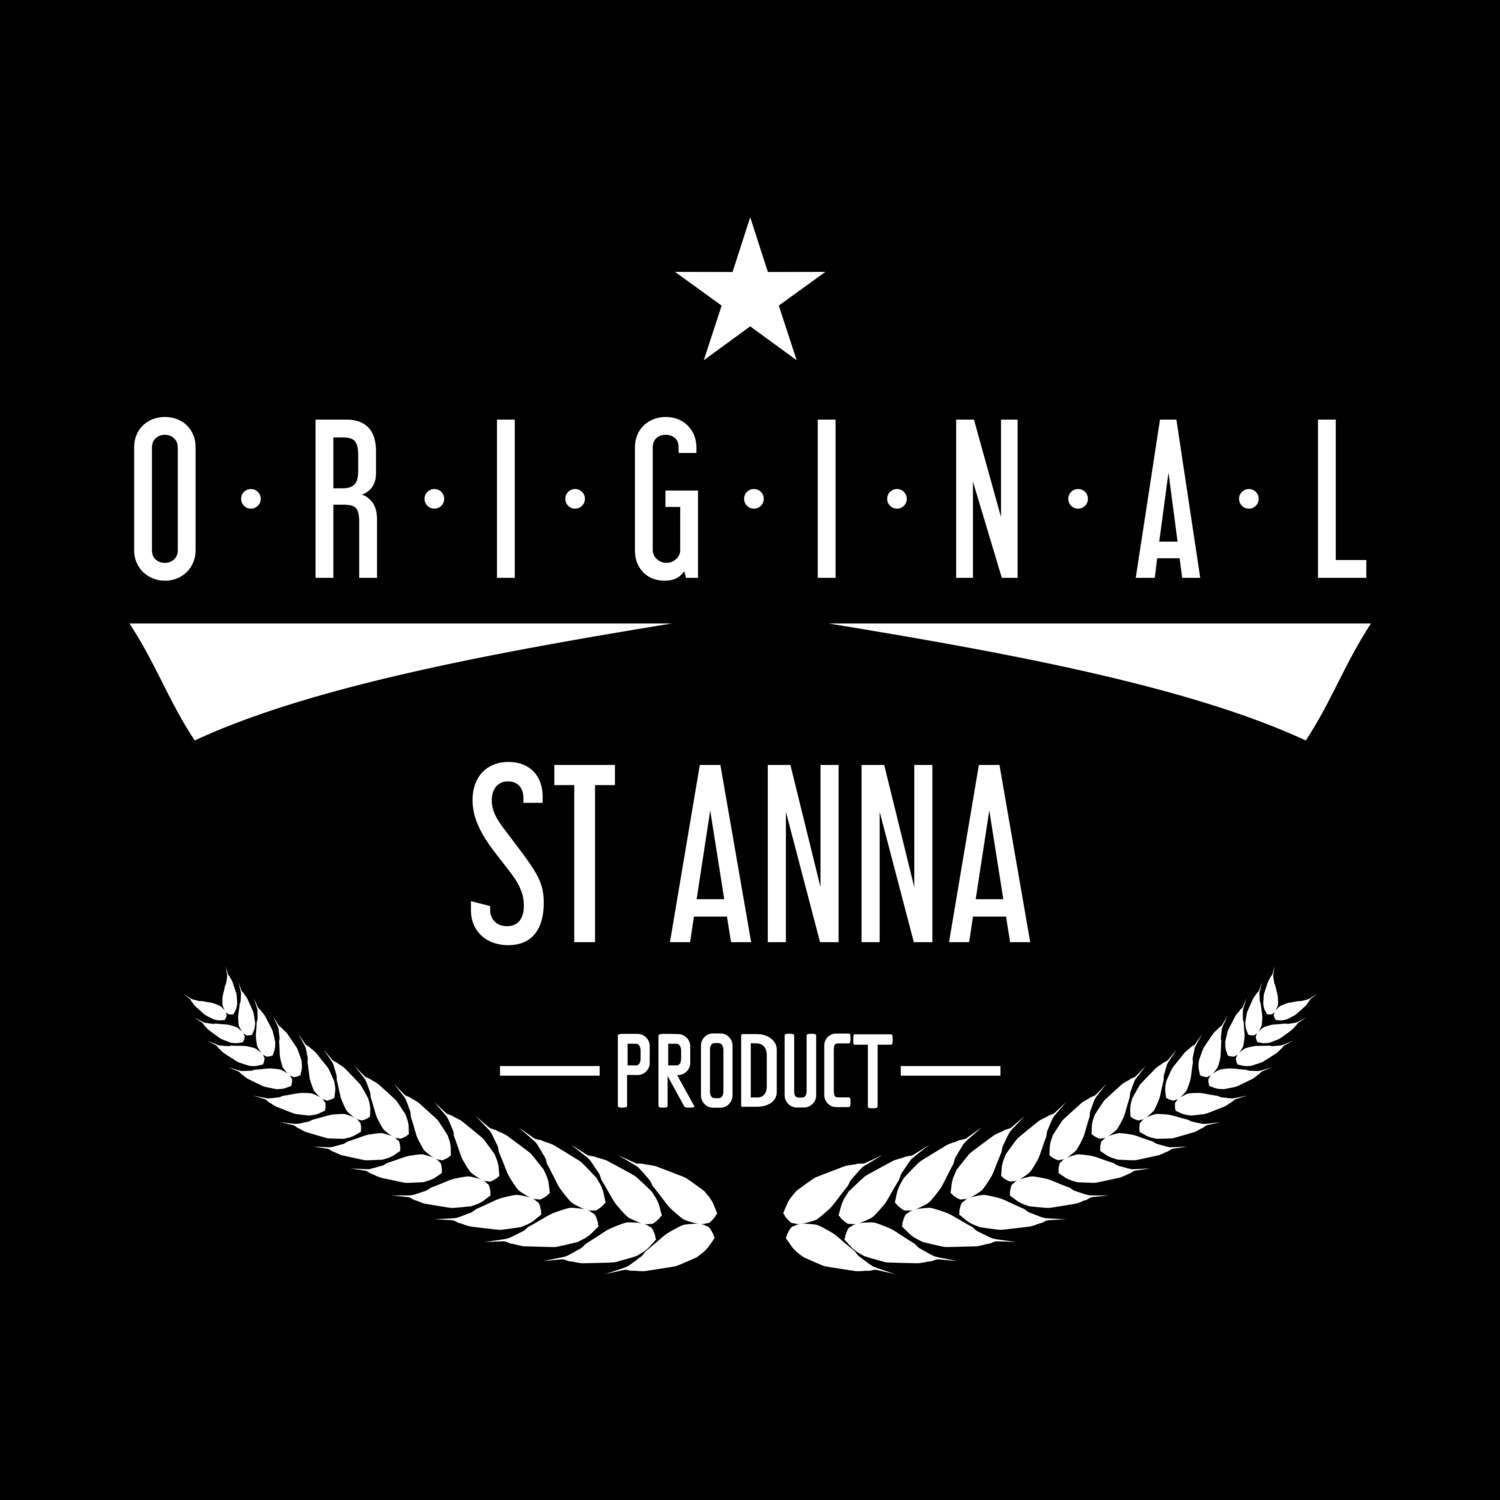 St Anna T-Shirt »Original Product«